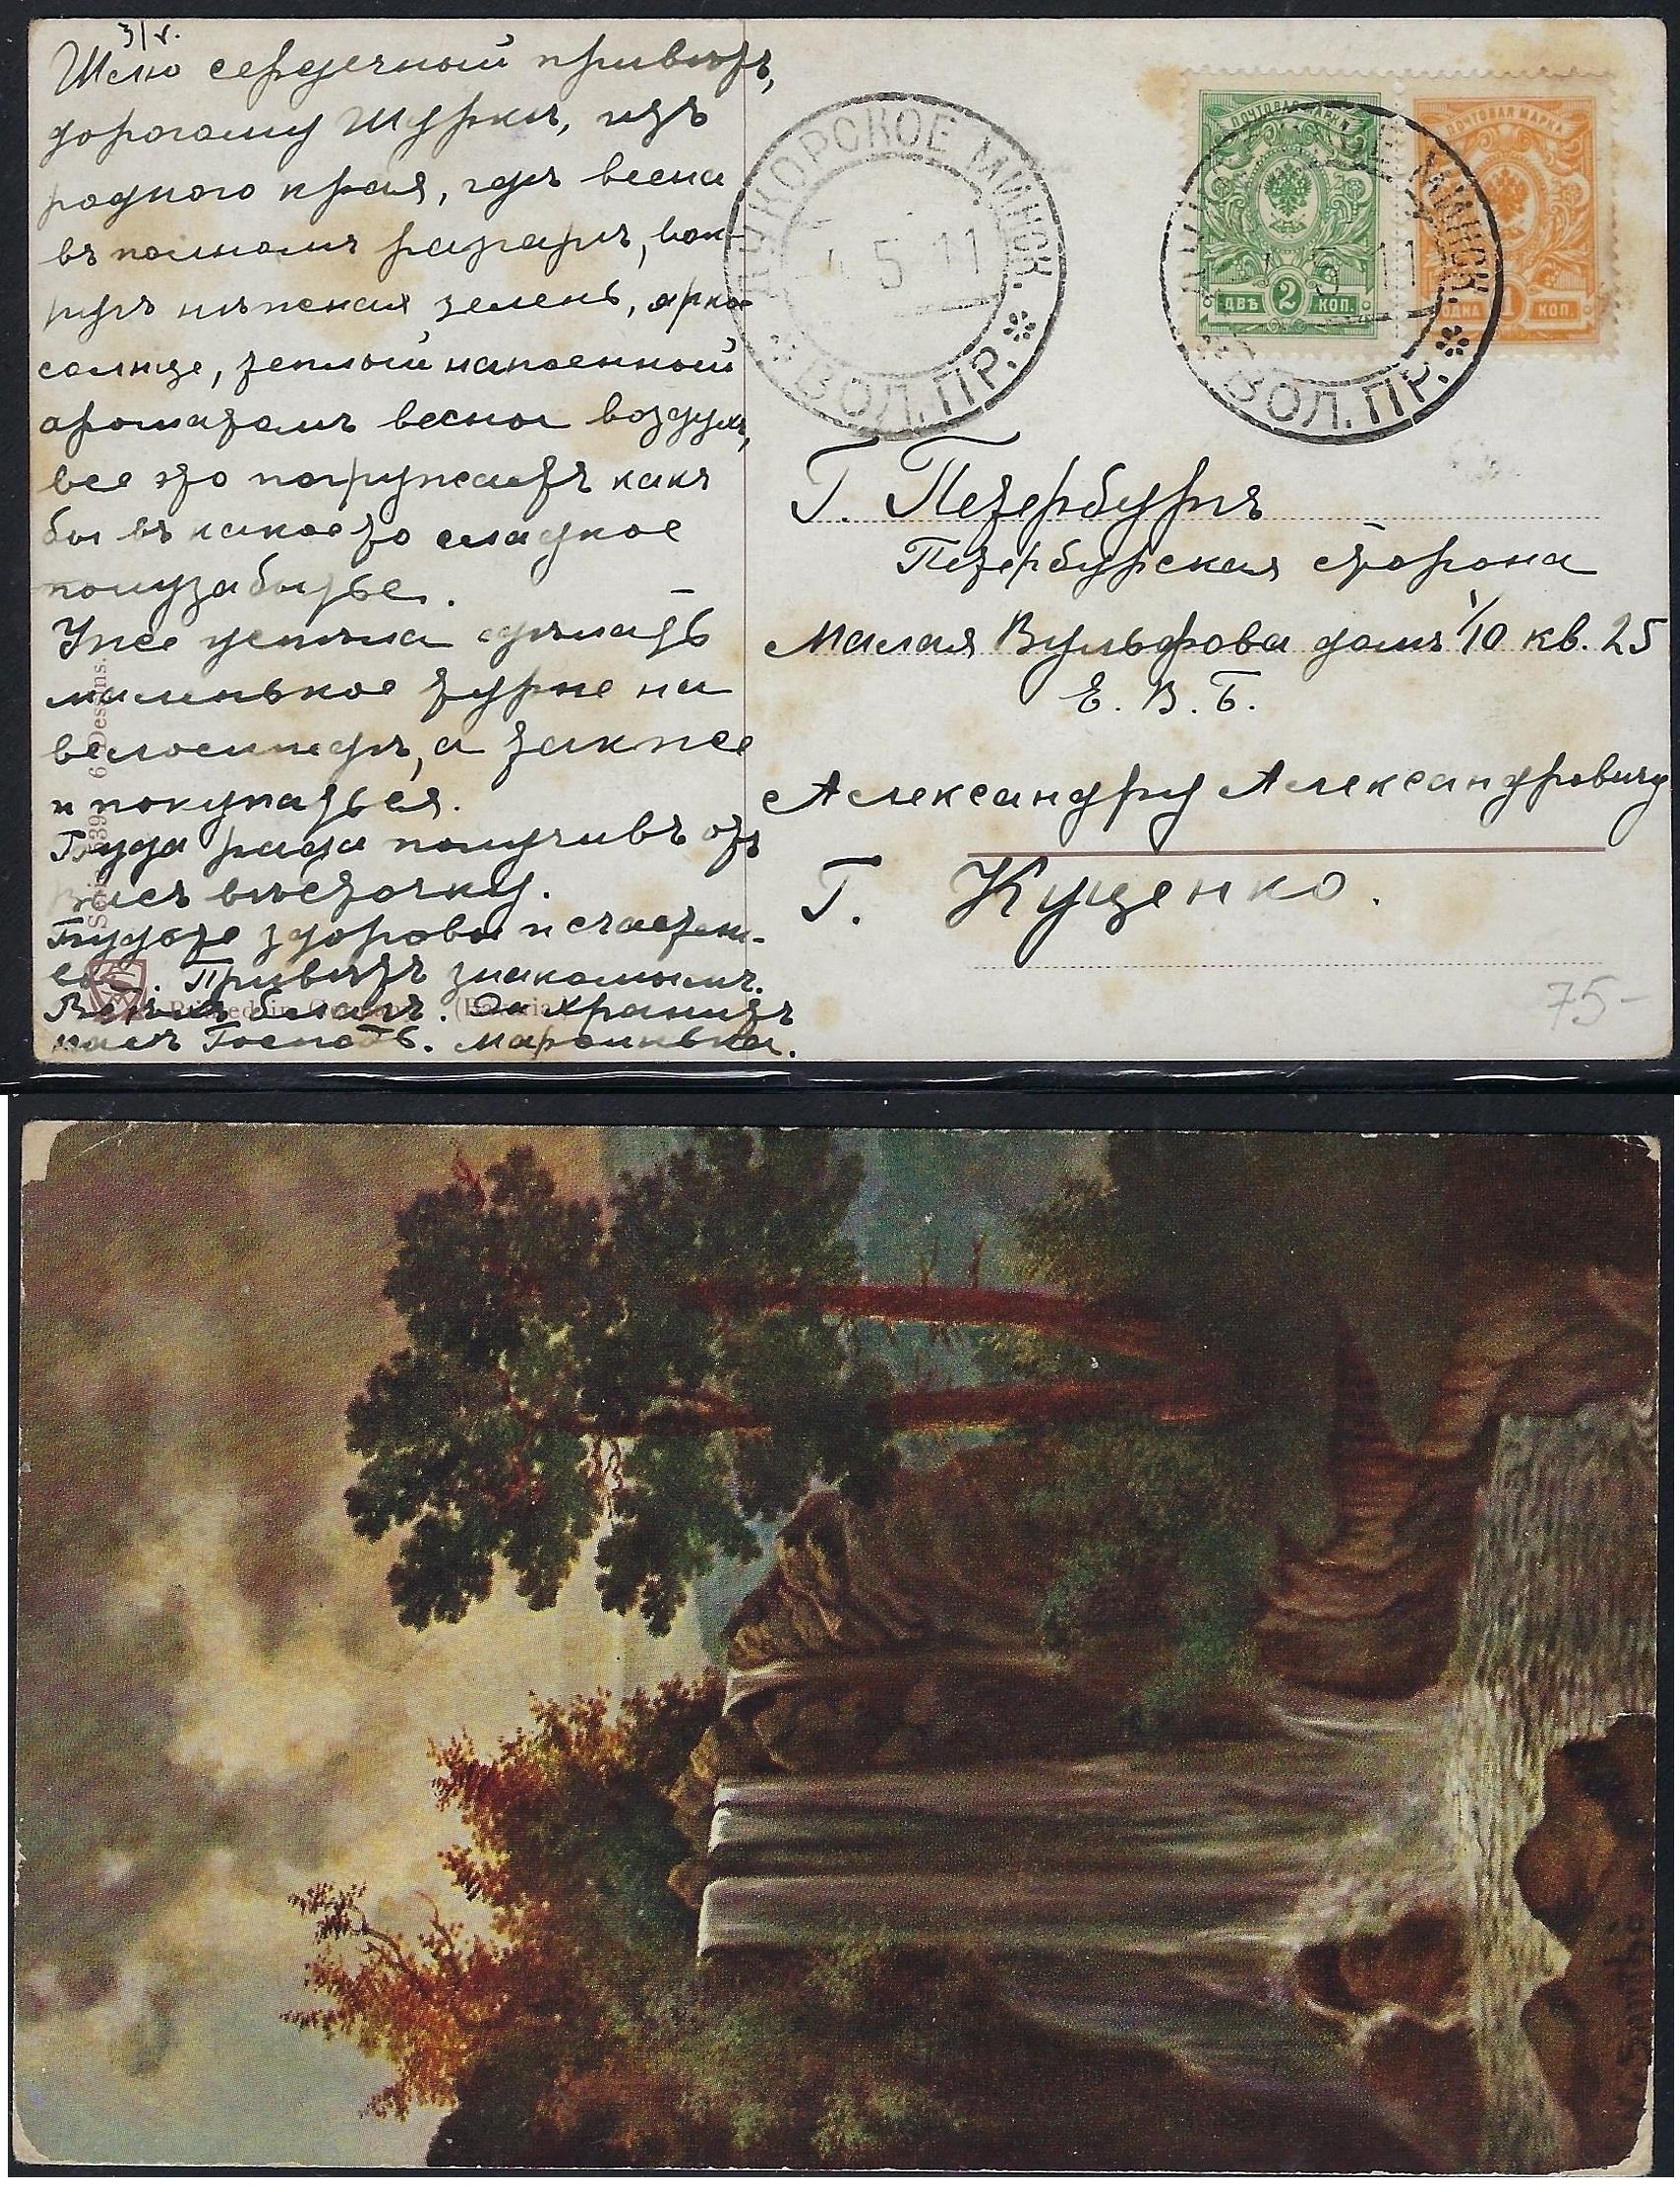 Russia Postal History - Postmarks Volostnoje Pravlenie Scott 091911 